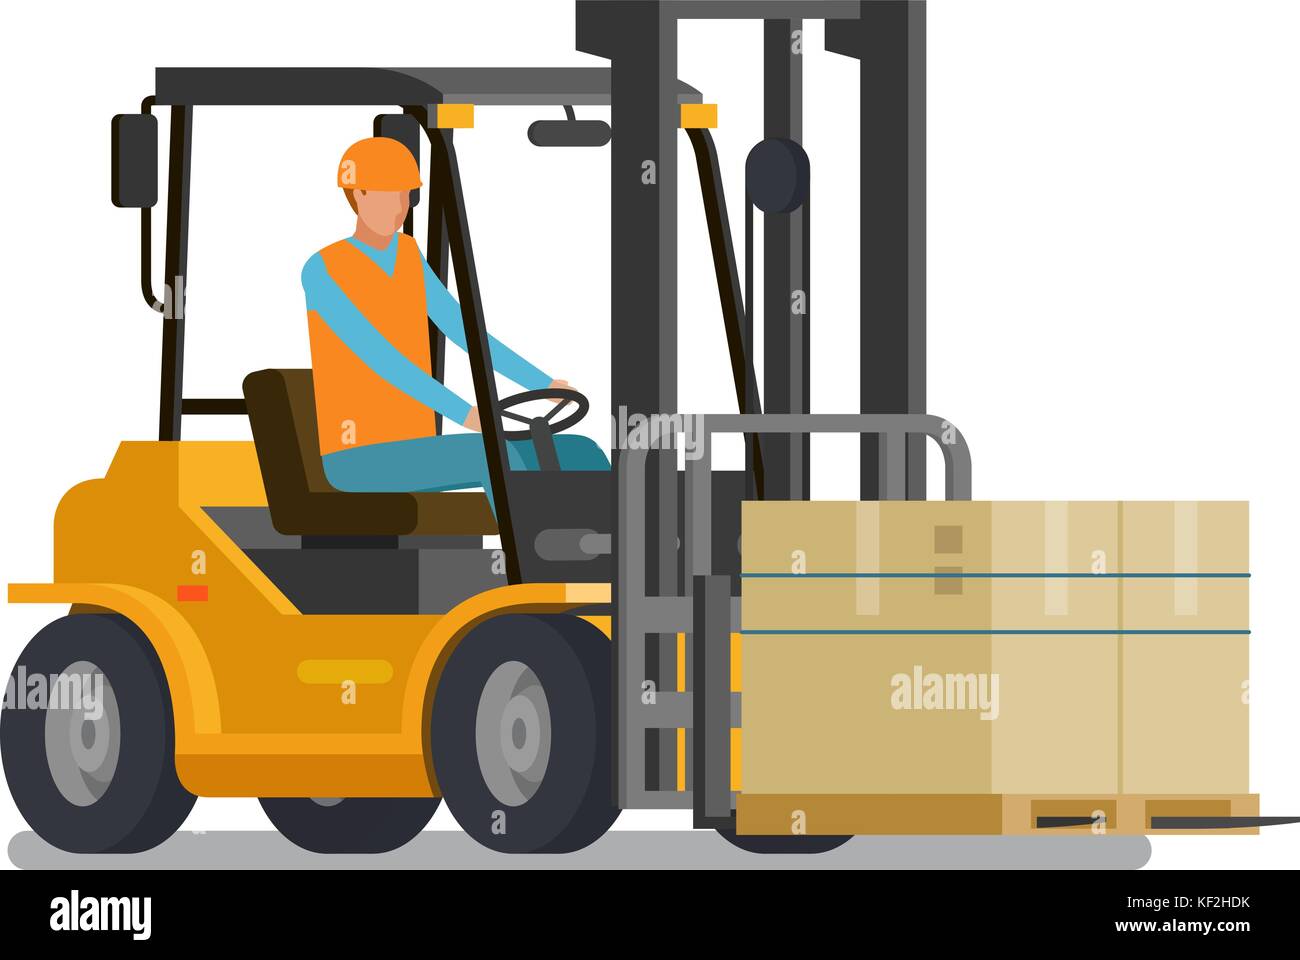 Forklift, lift truck. Warehouse, logistic, storage concept. Vector illustration Stock Vector